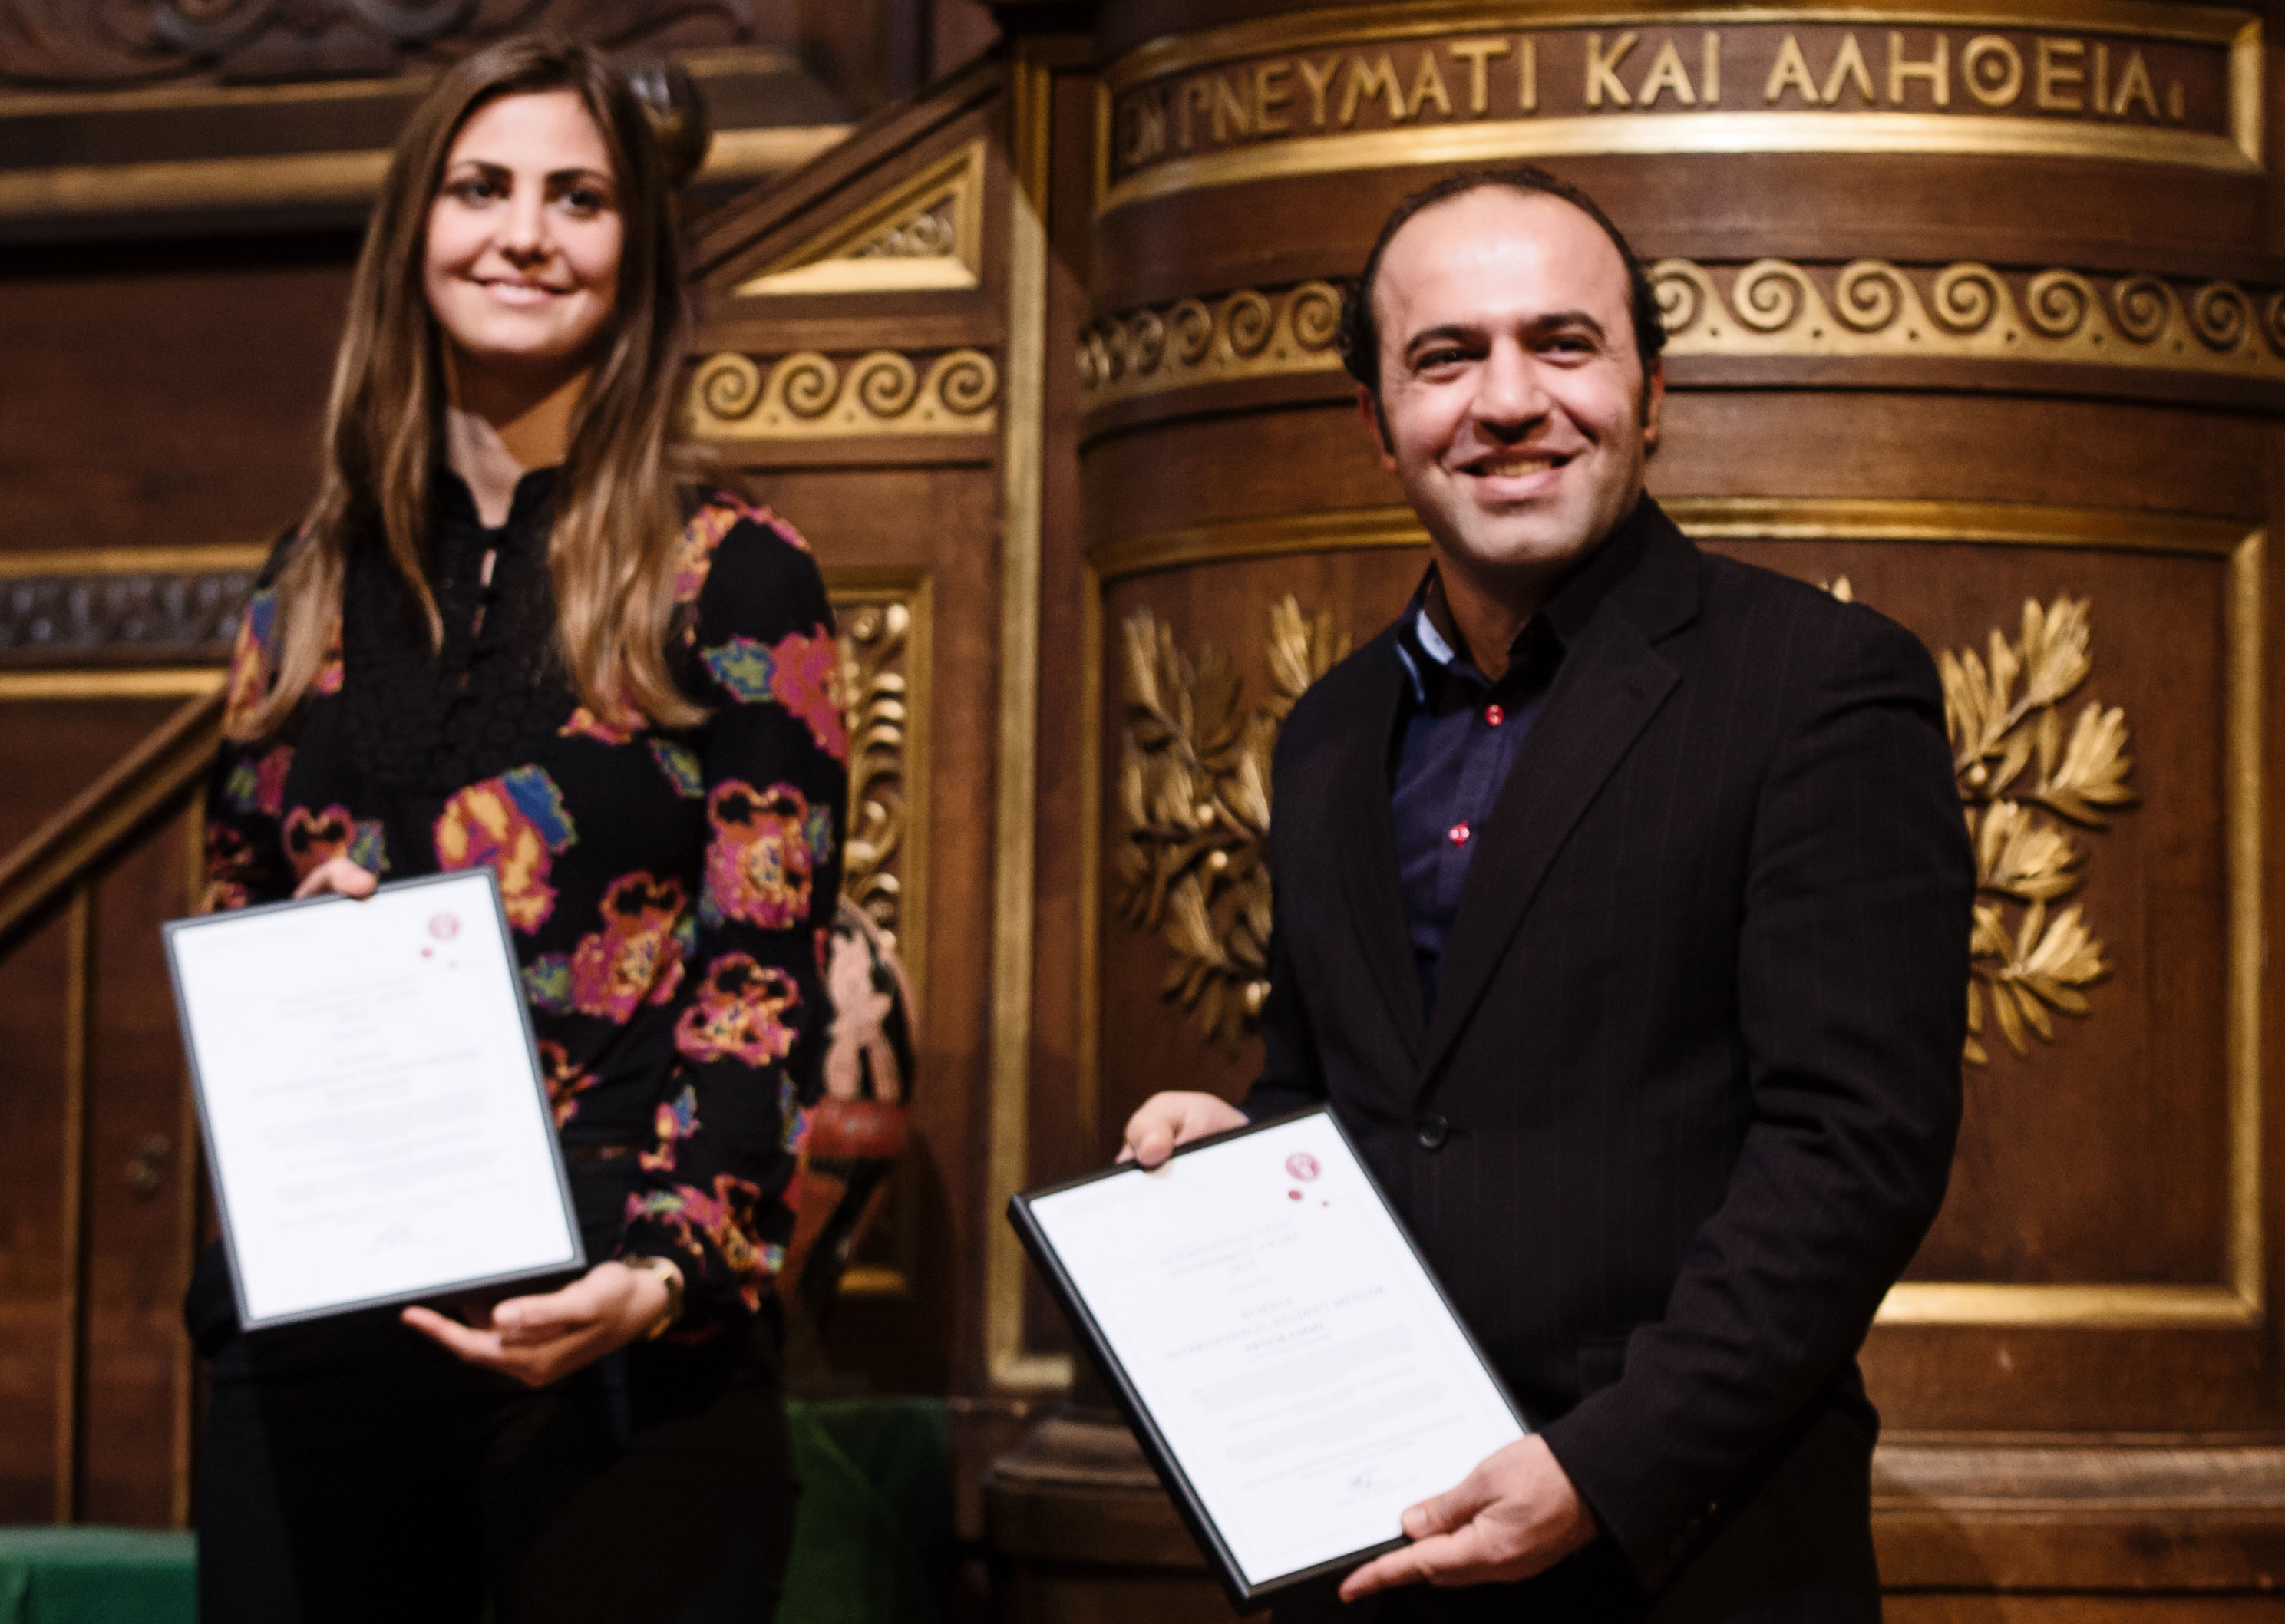 Award recipients: The mentors, Rezkar Jaafar Mohammad and Ghislaine Calleja.